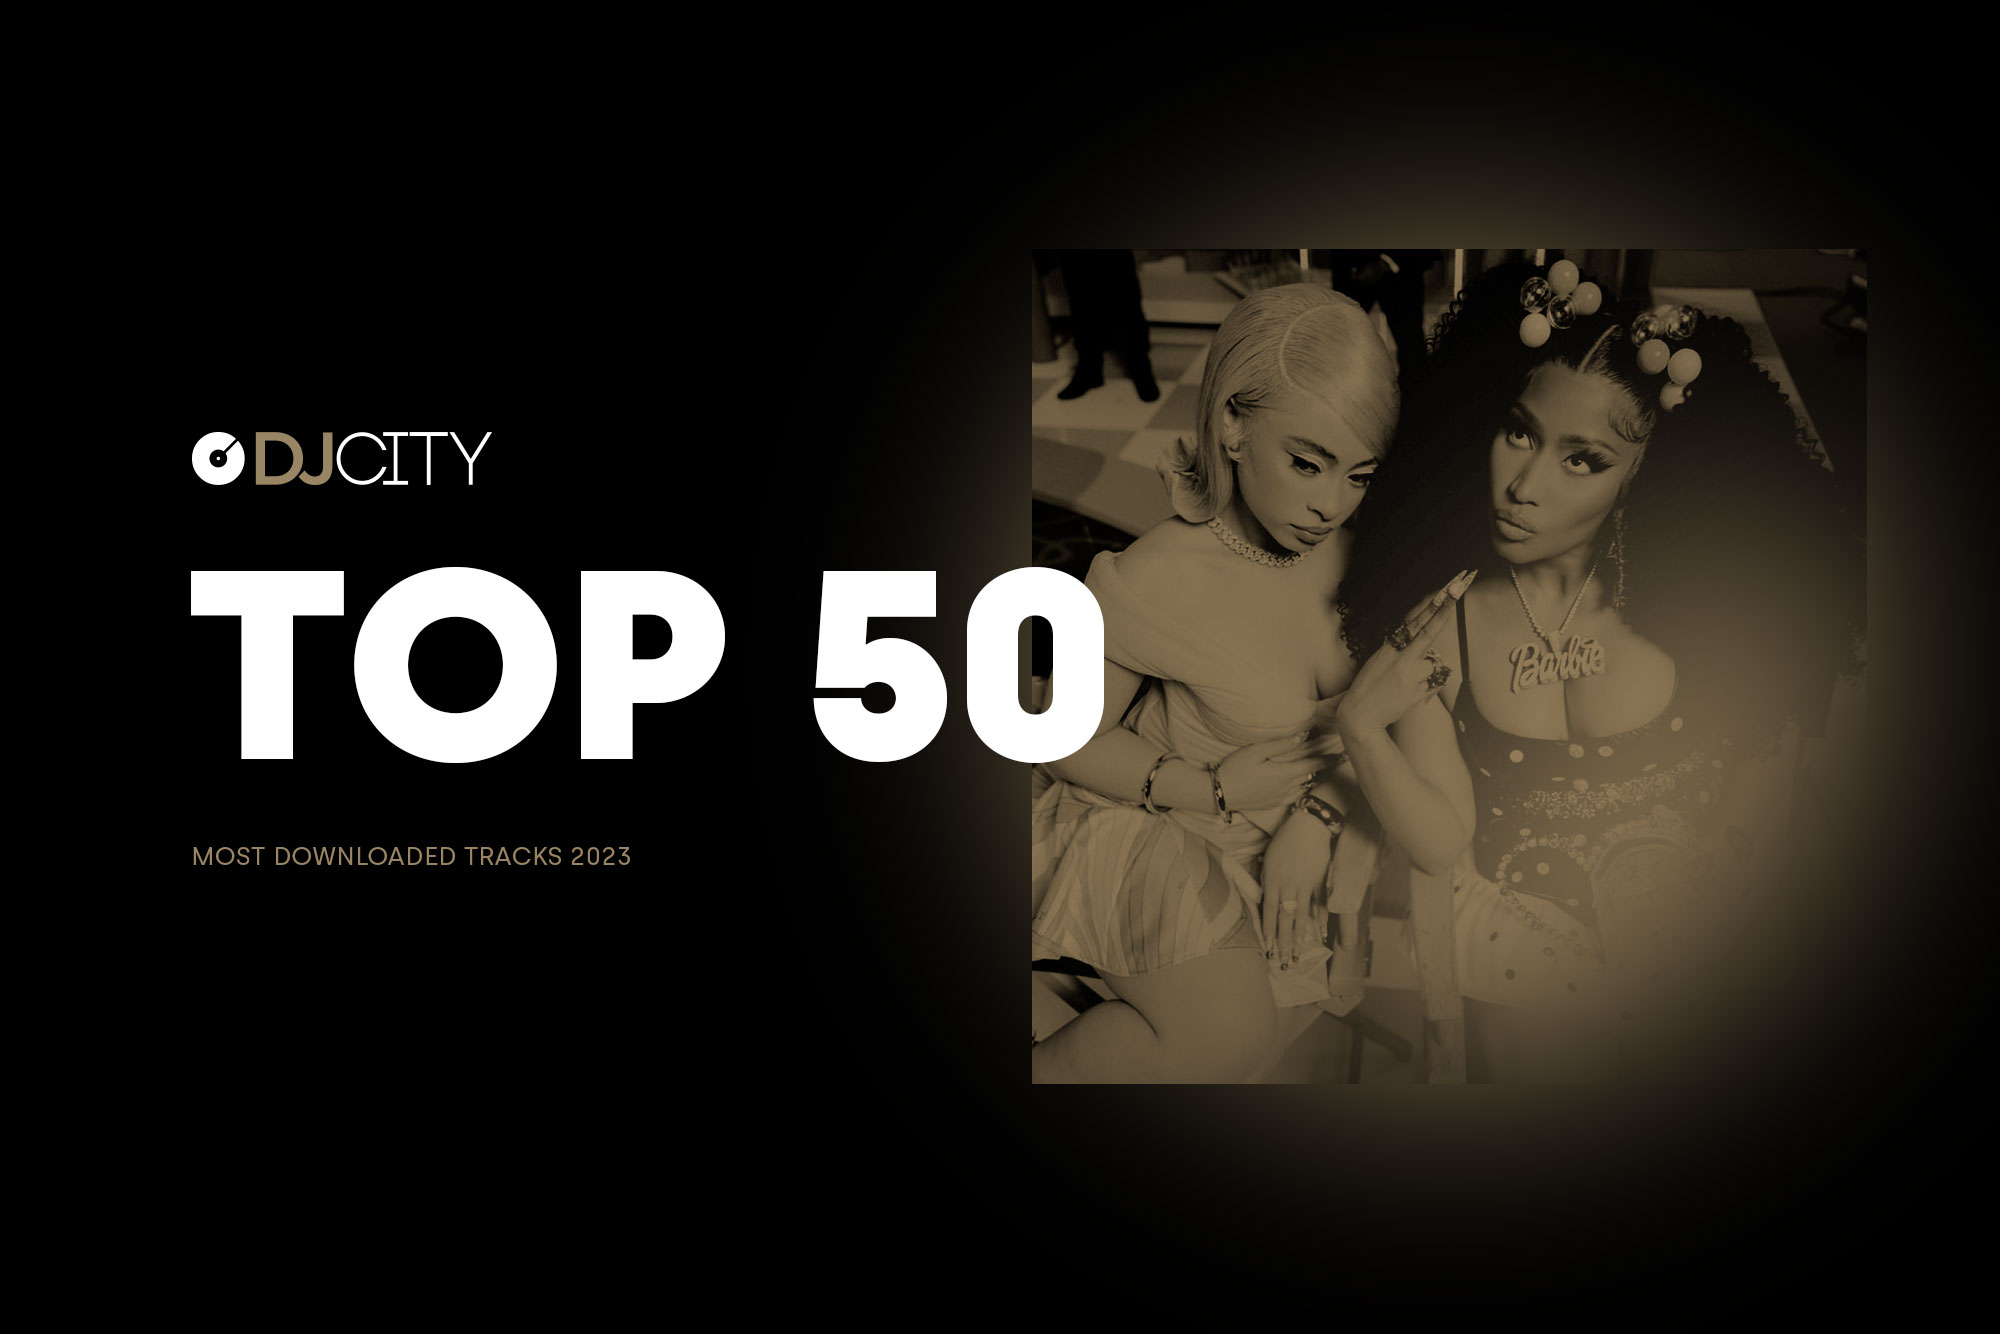 DJcity’s 50 Most Downloaded Tracks of 2023